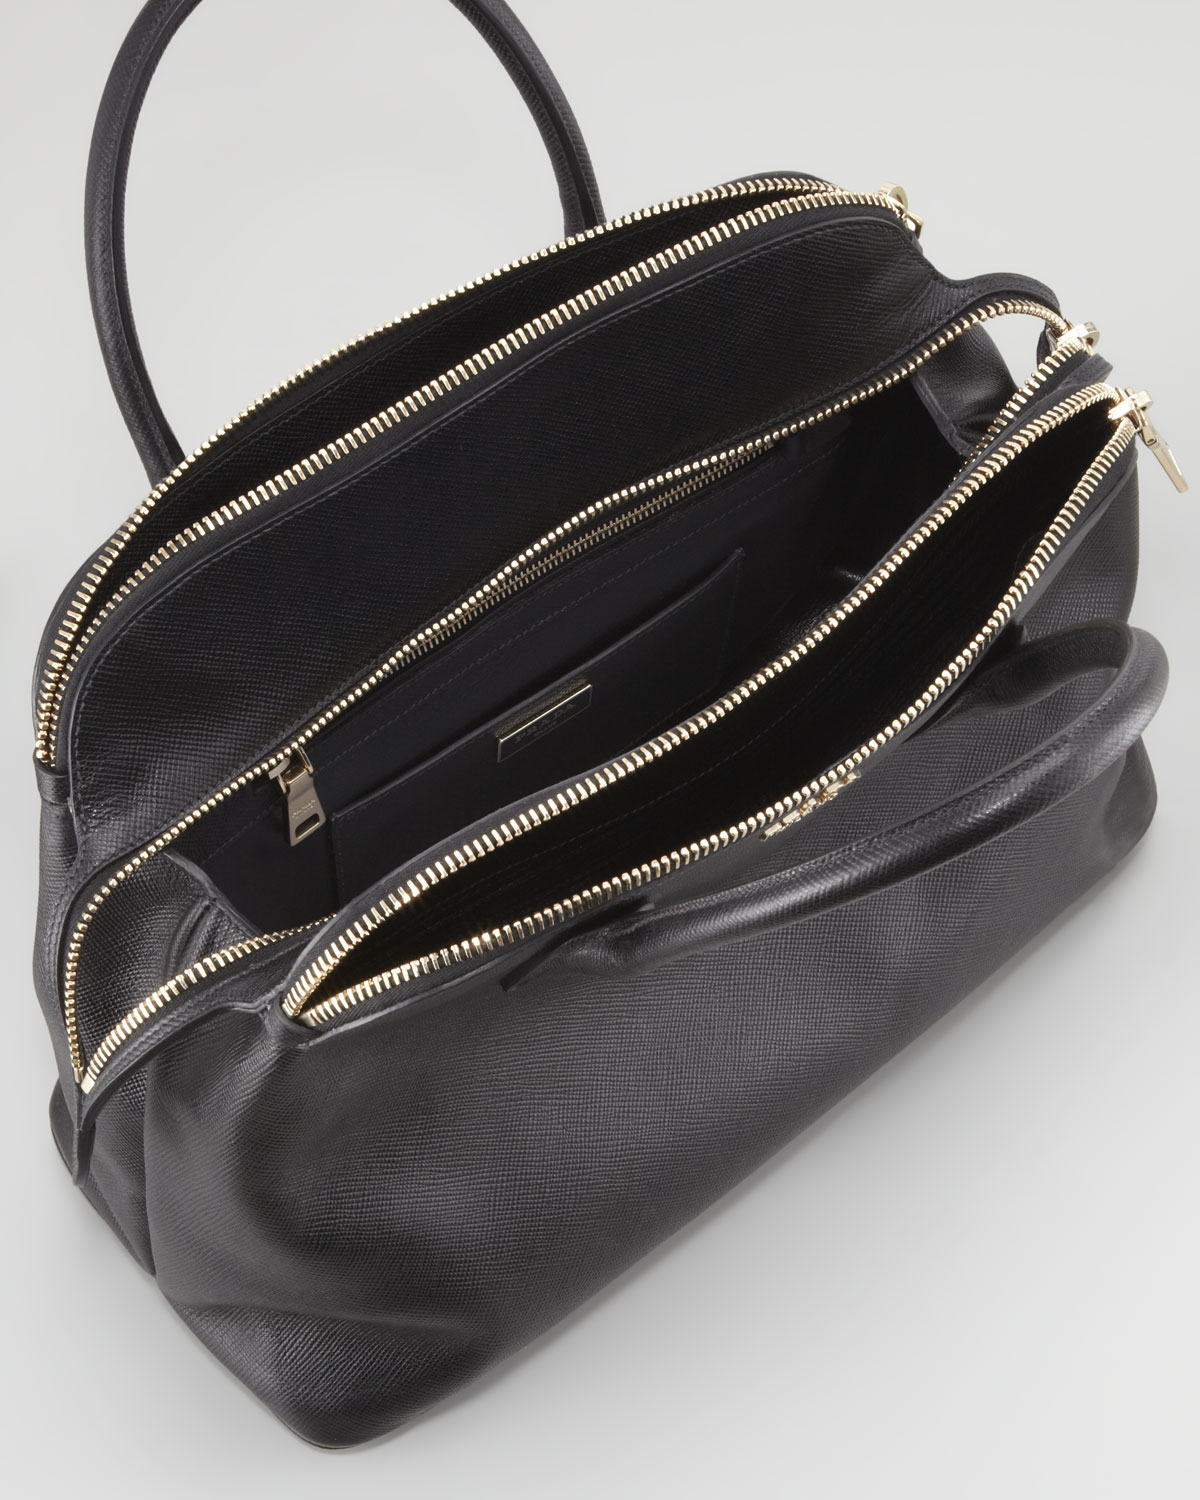 Prada Dome Tote Bag in Black | Lyst